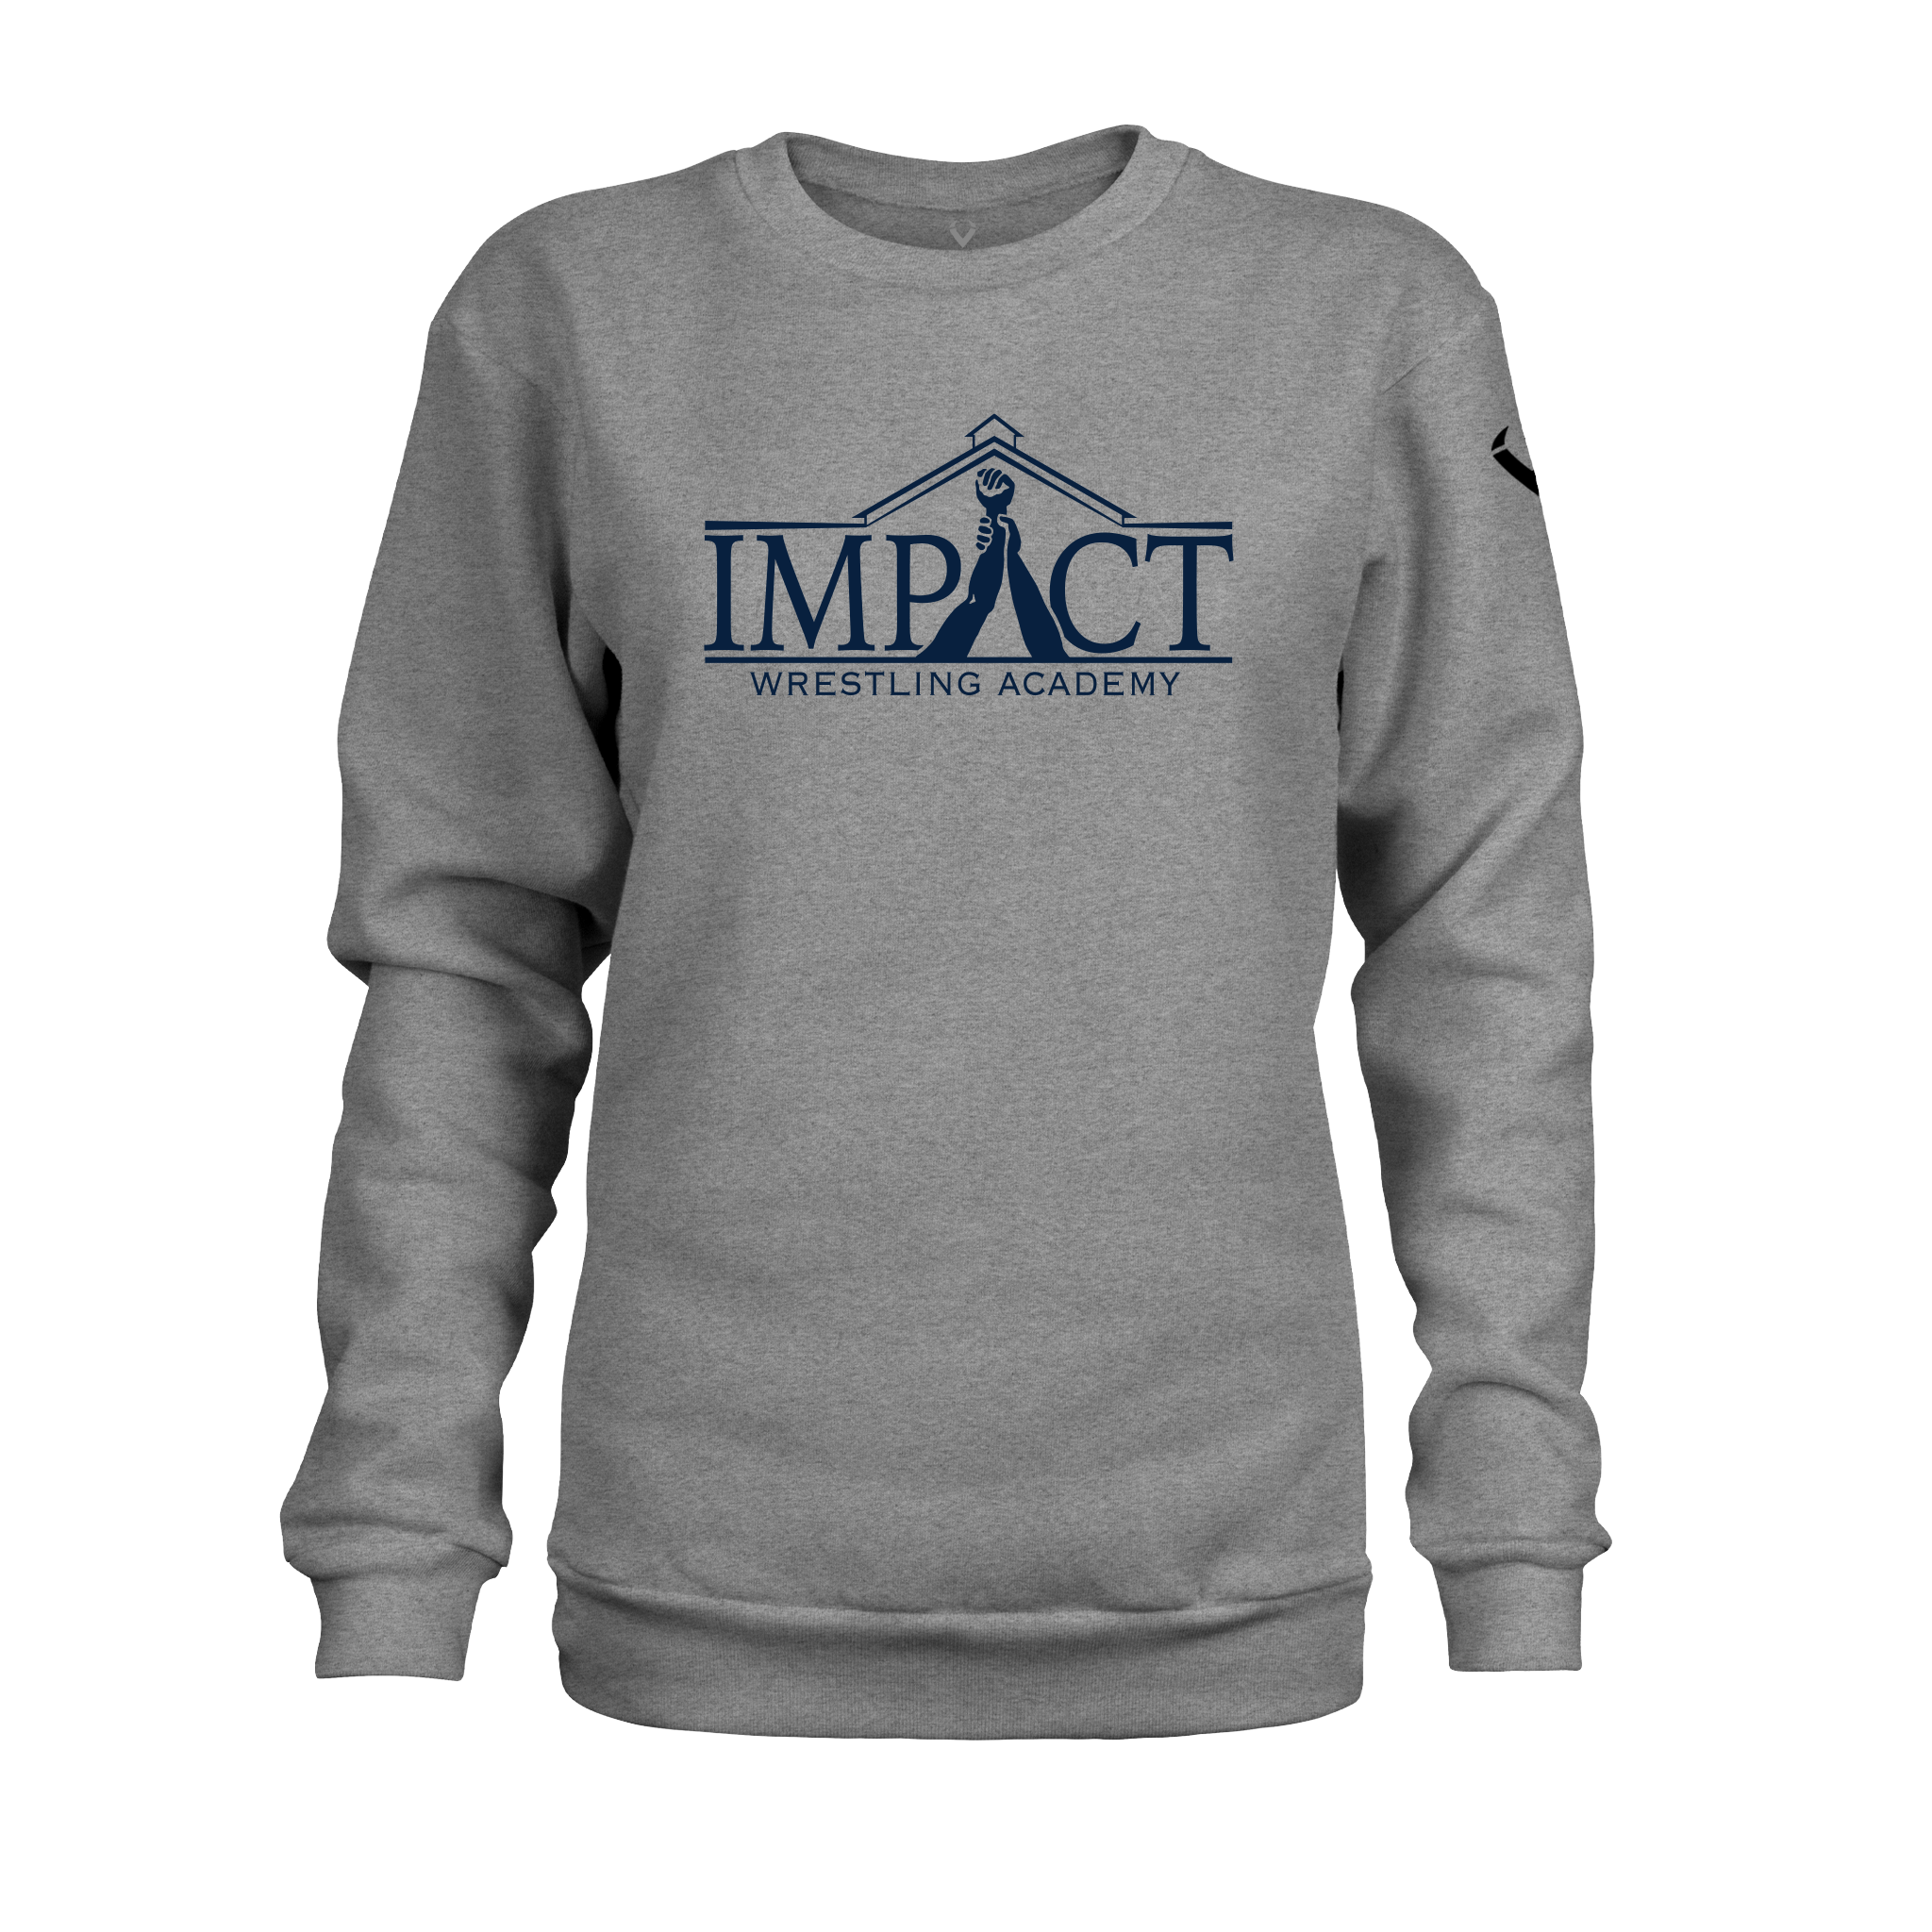 Impact Wrestling Academy -  Midweight Sweatshirt